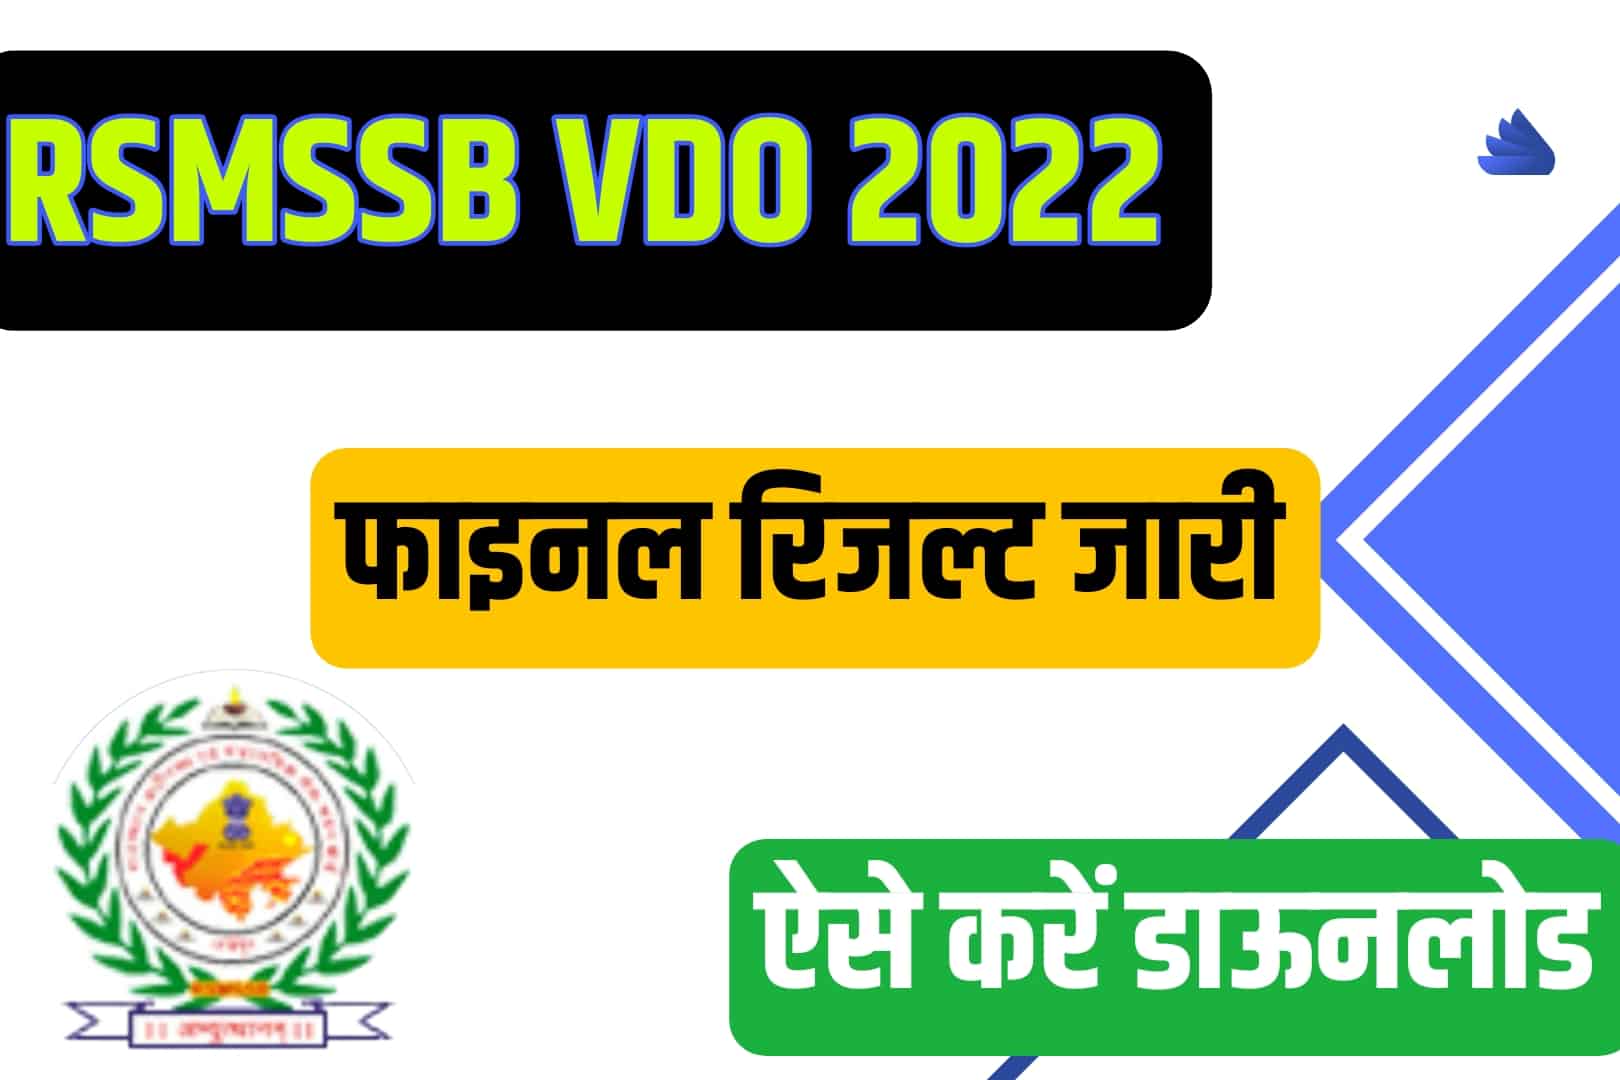 RSMSSB VDO Final Result 2022 | राजस्थान VDO रिजल्ट